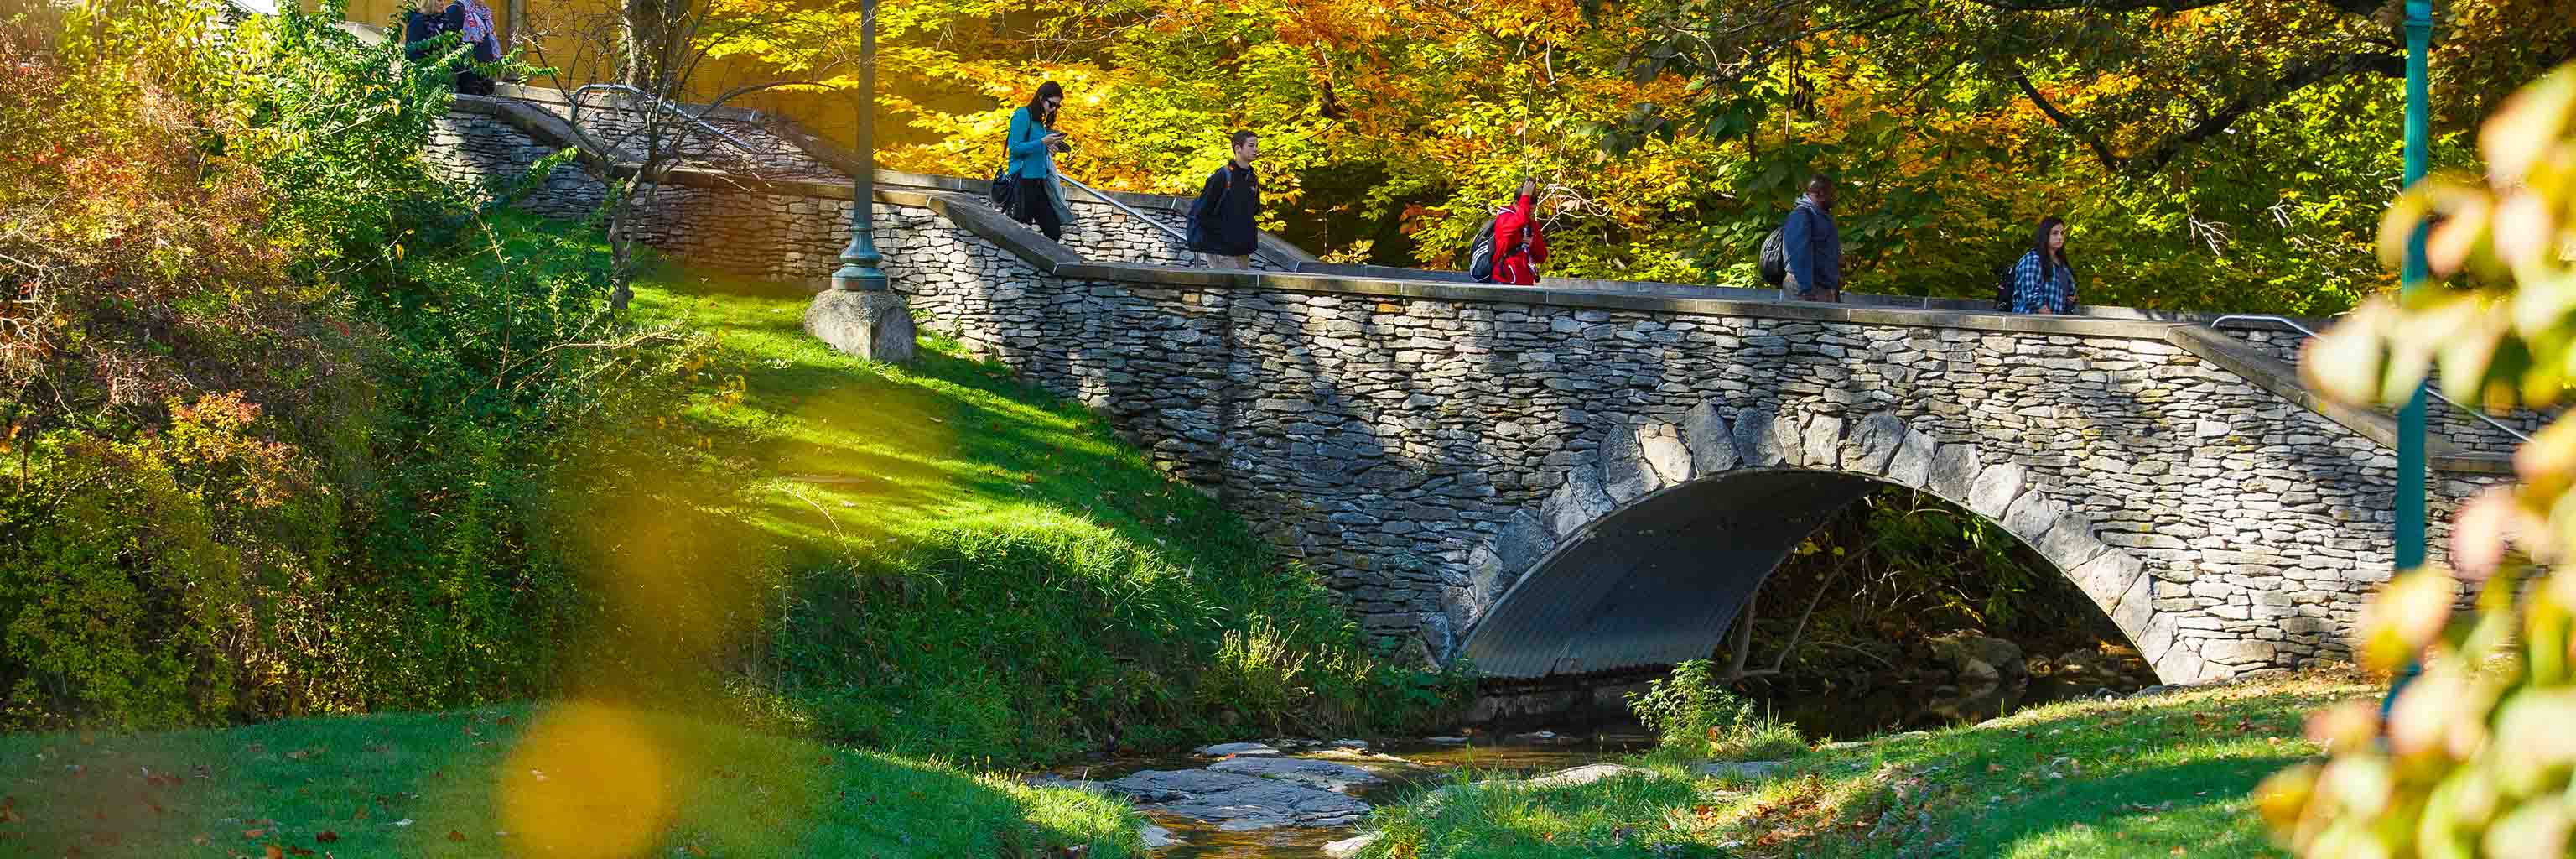 People walk across a stone bridge that spans the Campus River.